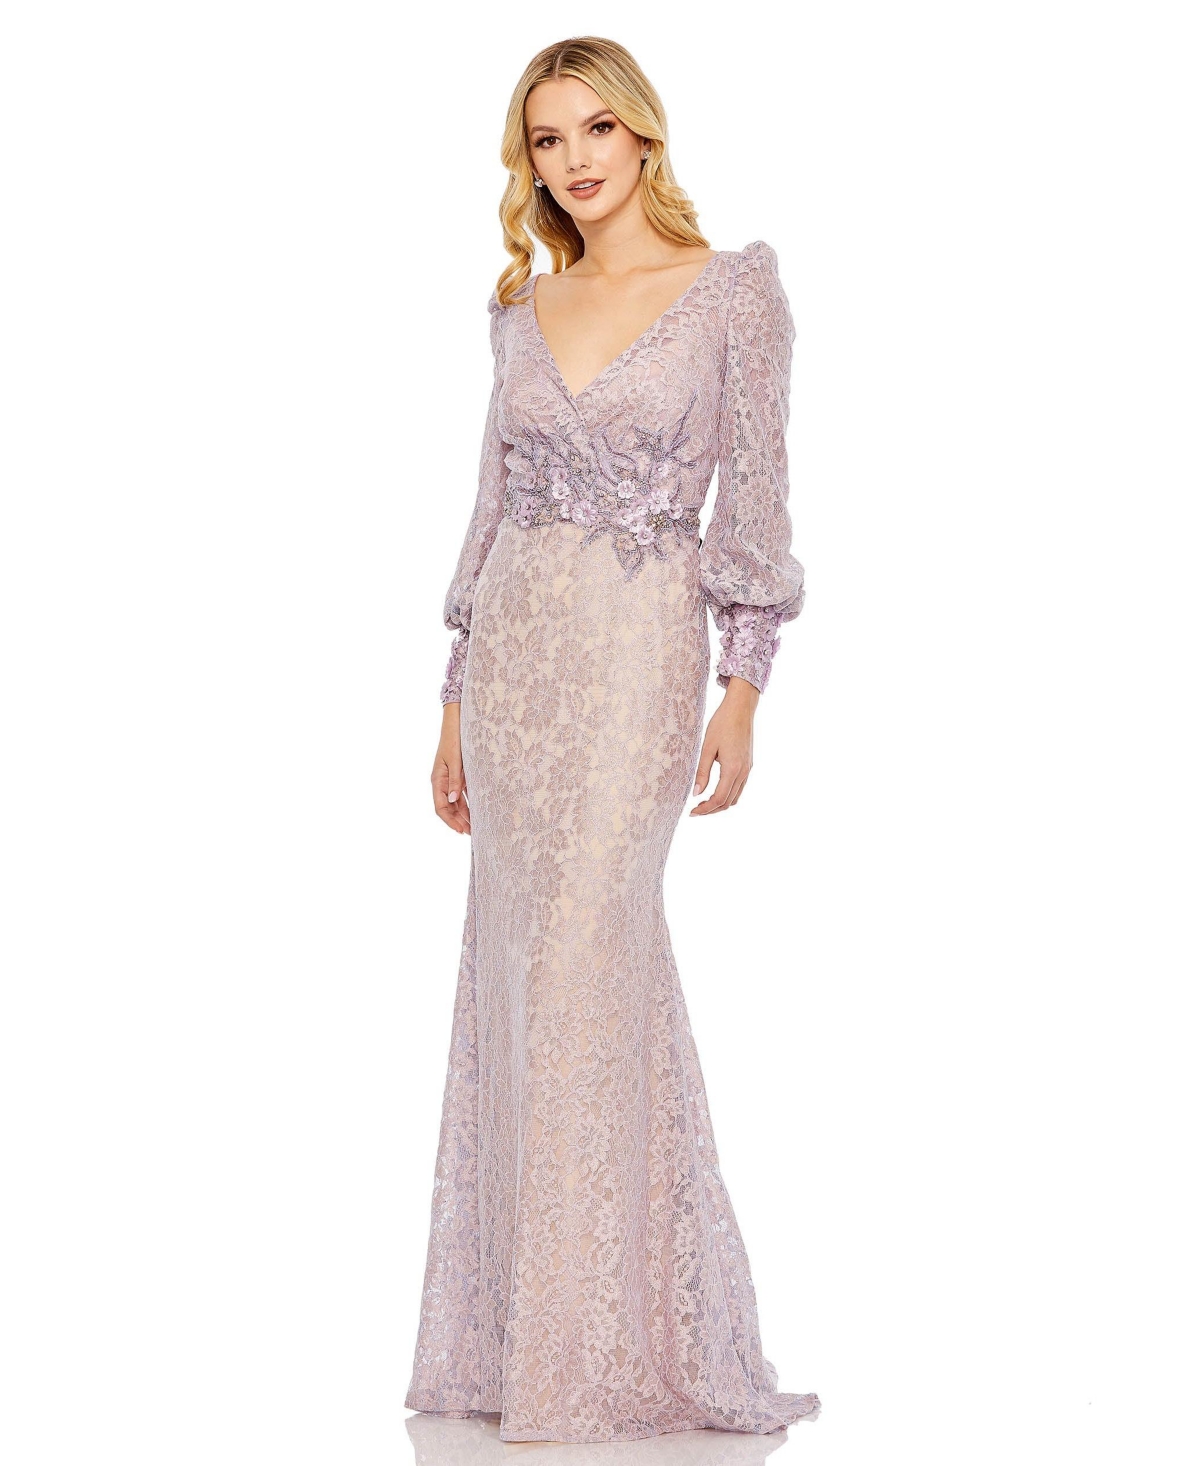 Women's Lace Long Sleeve V Neck Embellished Gown - Blush